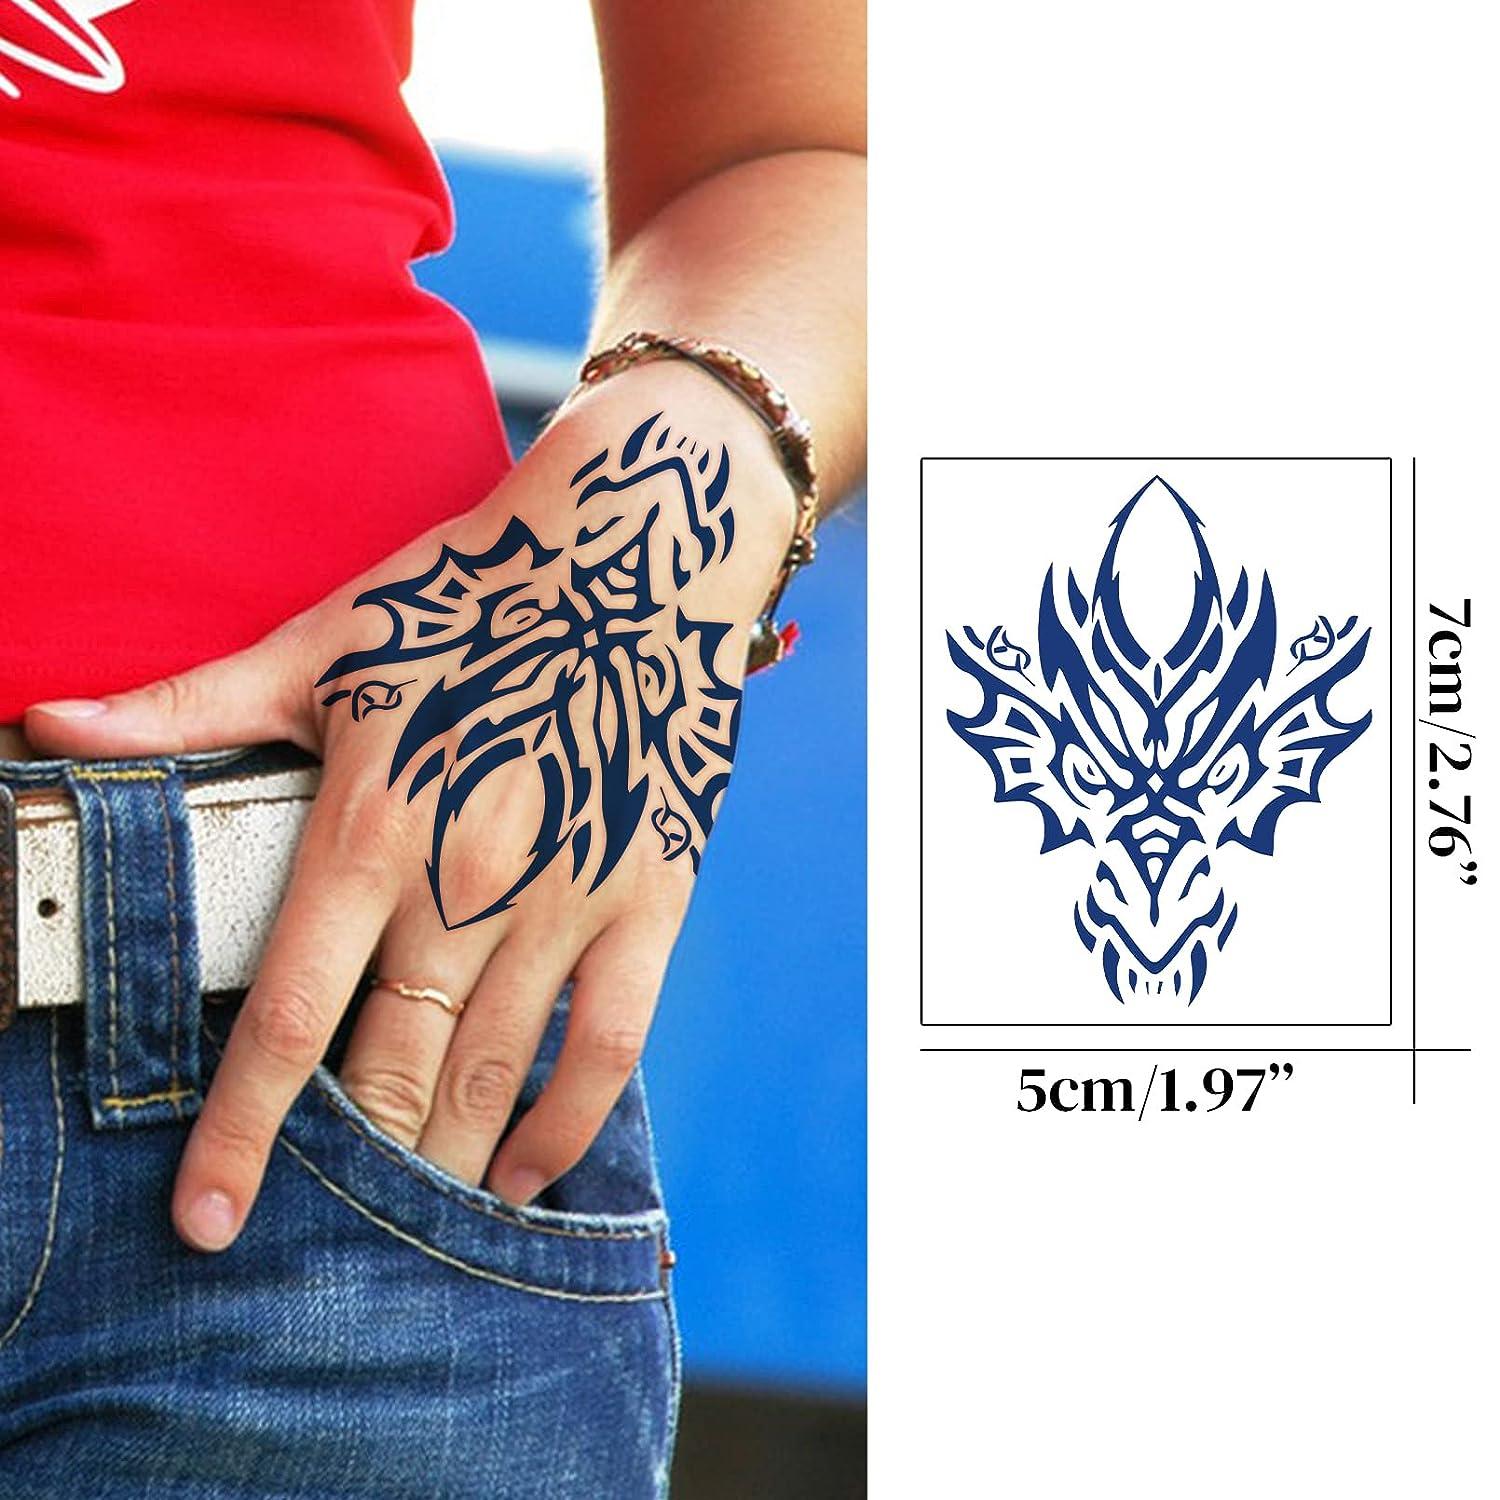 Fire Tattoo | Wrist tattoos for guys, Flame tattoos, Tattoo designs men